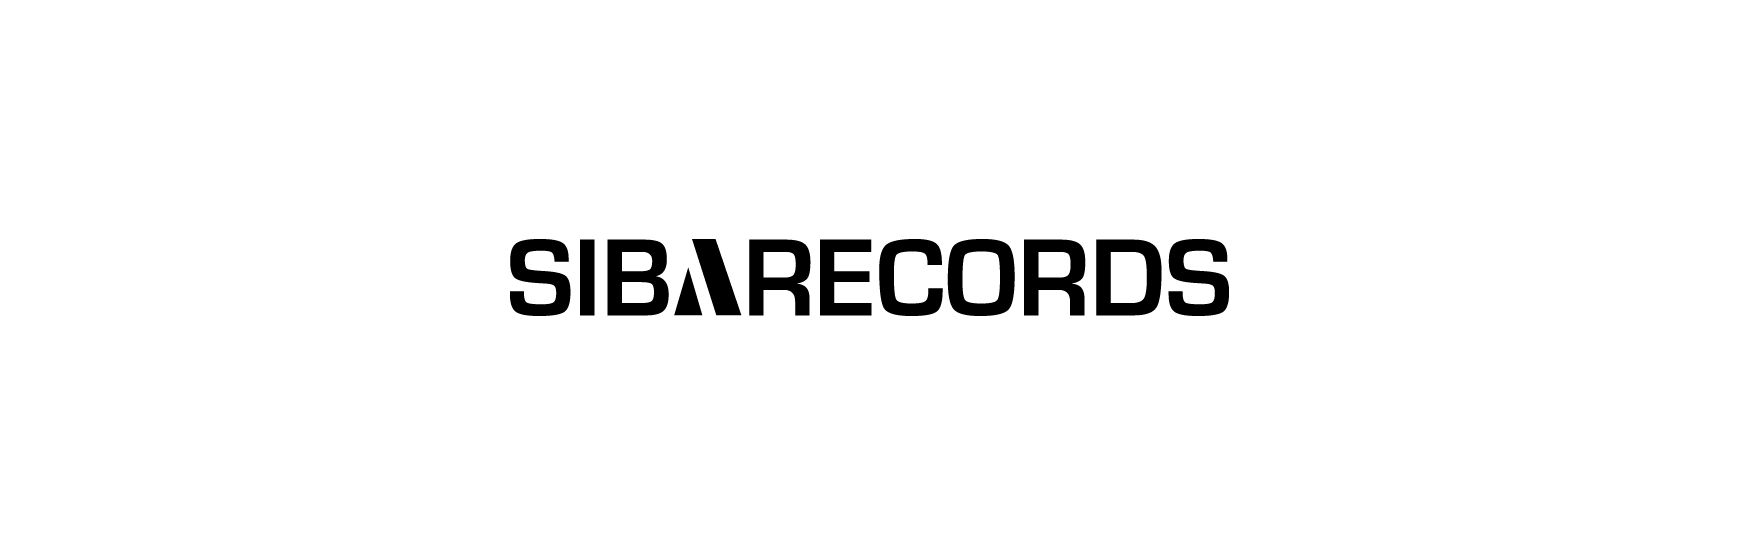 Image shows the Sibarecords logo